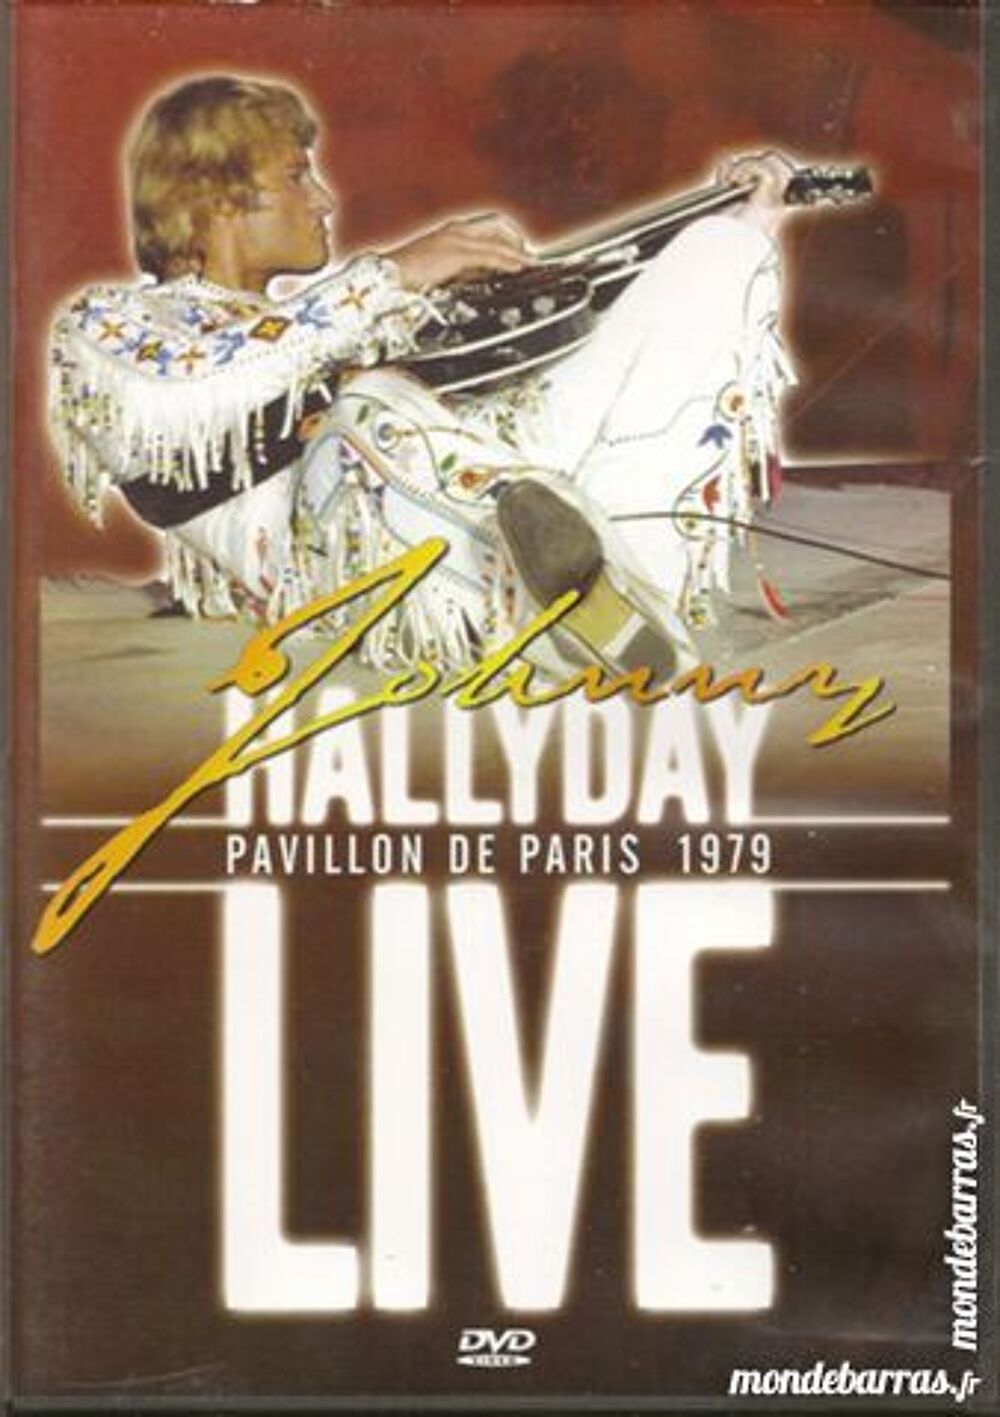 Johnny Hallyday Pavillon de Paris 1979 DVD et blu-ray